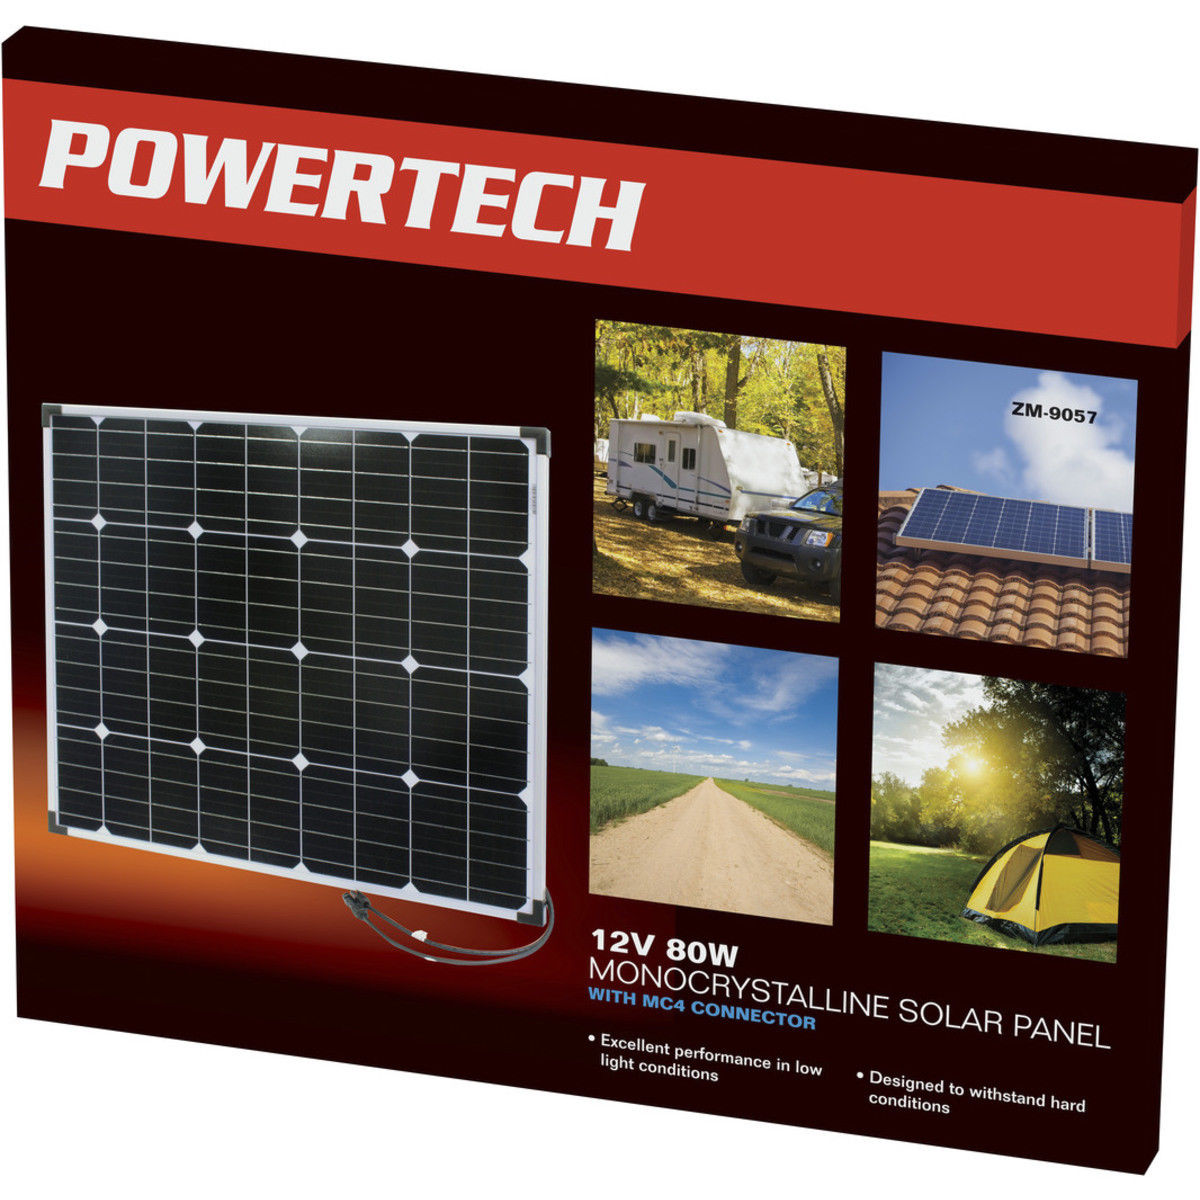 12V 80W Monocrystalline Solar Panel HOME GENERATOR CARAVAN CAMPING POWER BATTERY eBay